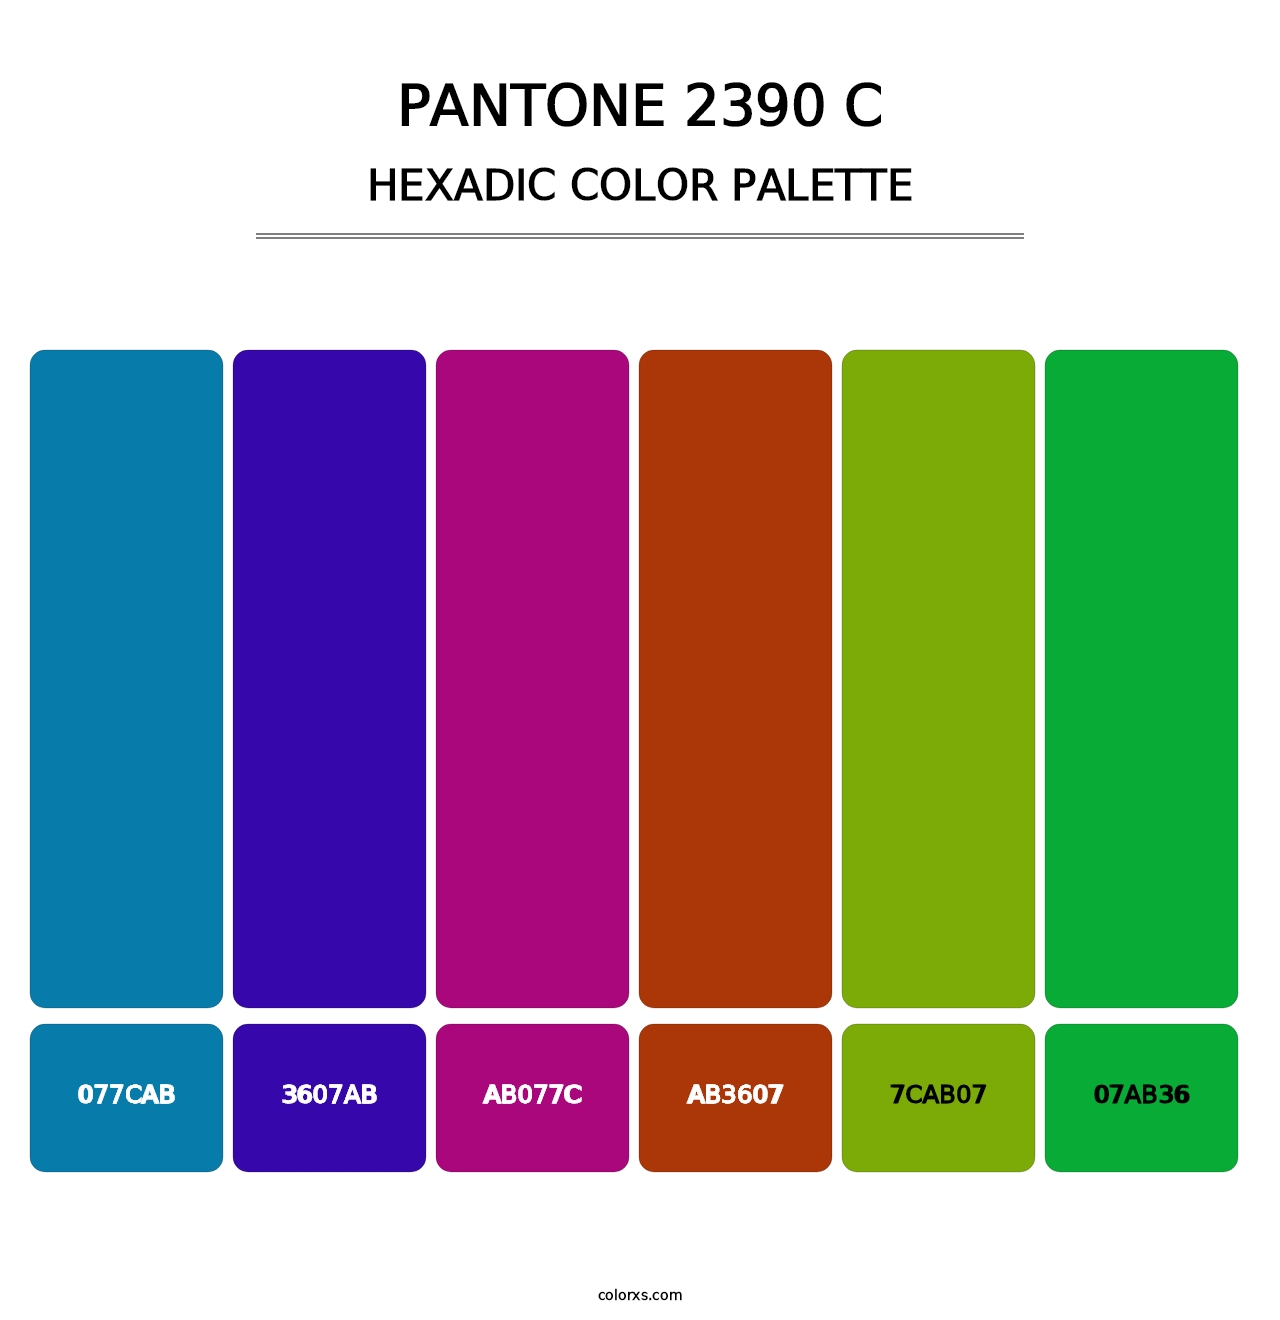 PANTONE 2390 C - Hexadic Color Palette